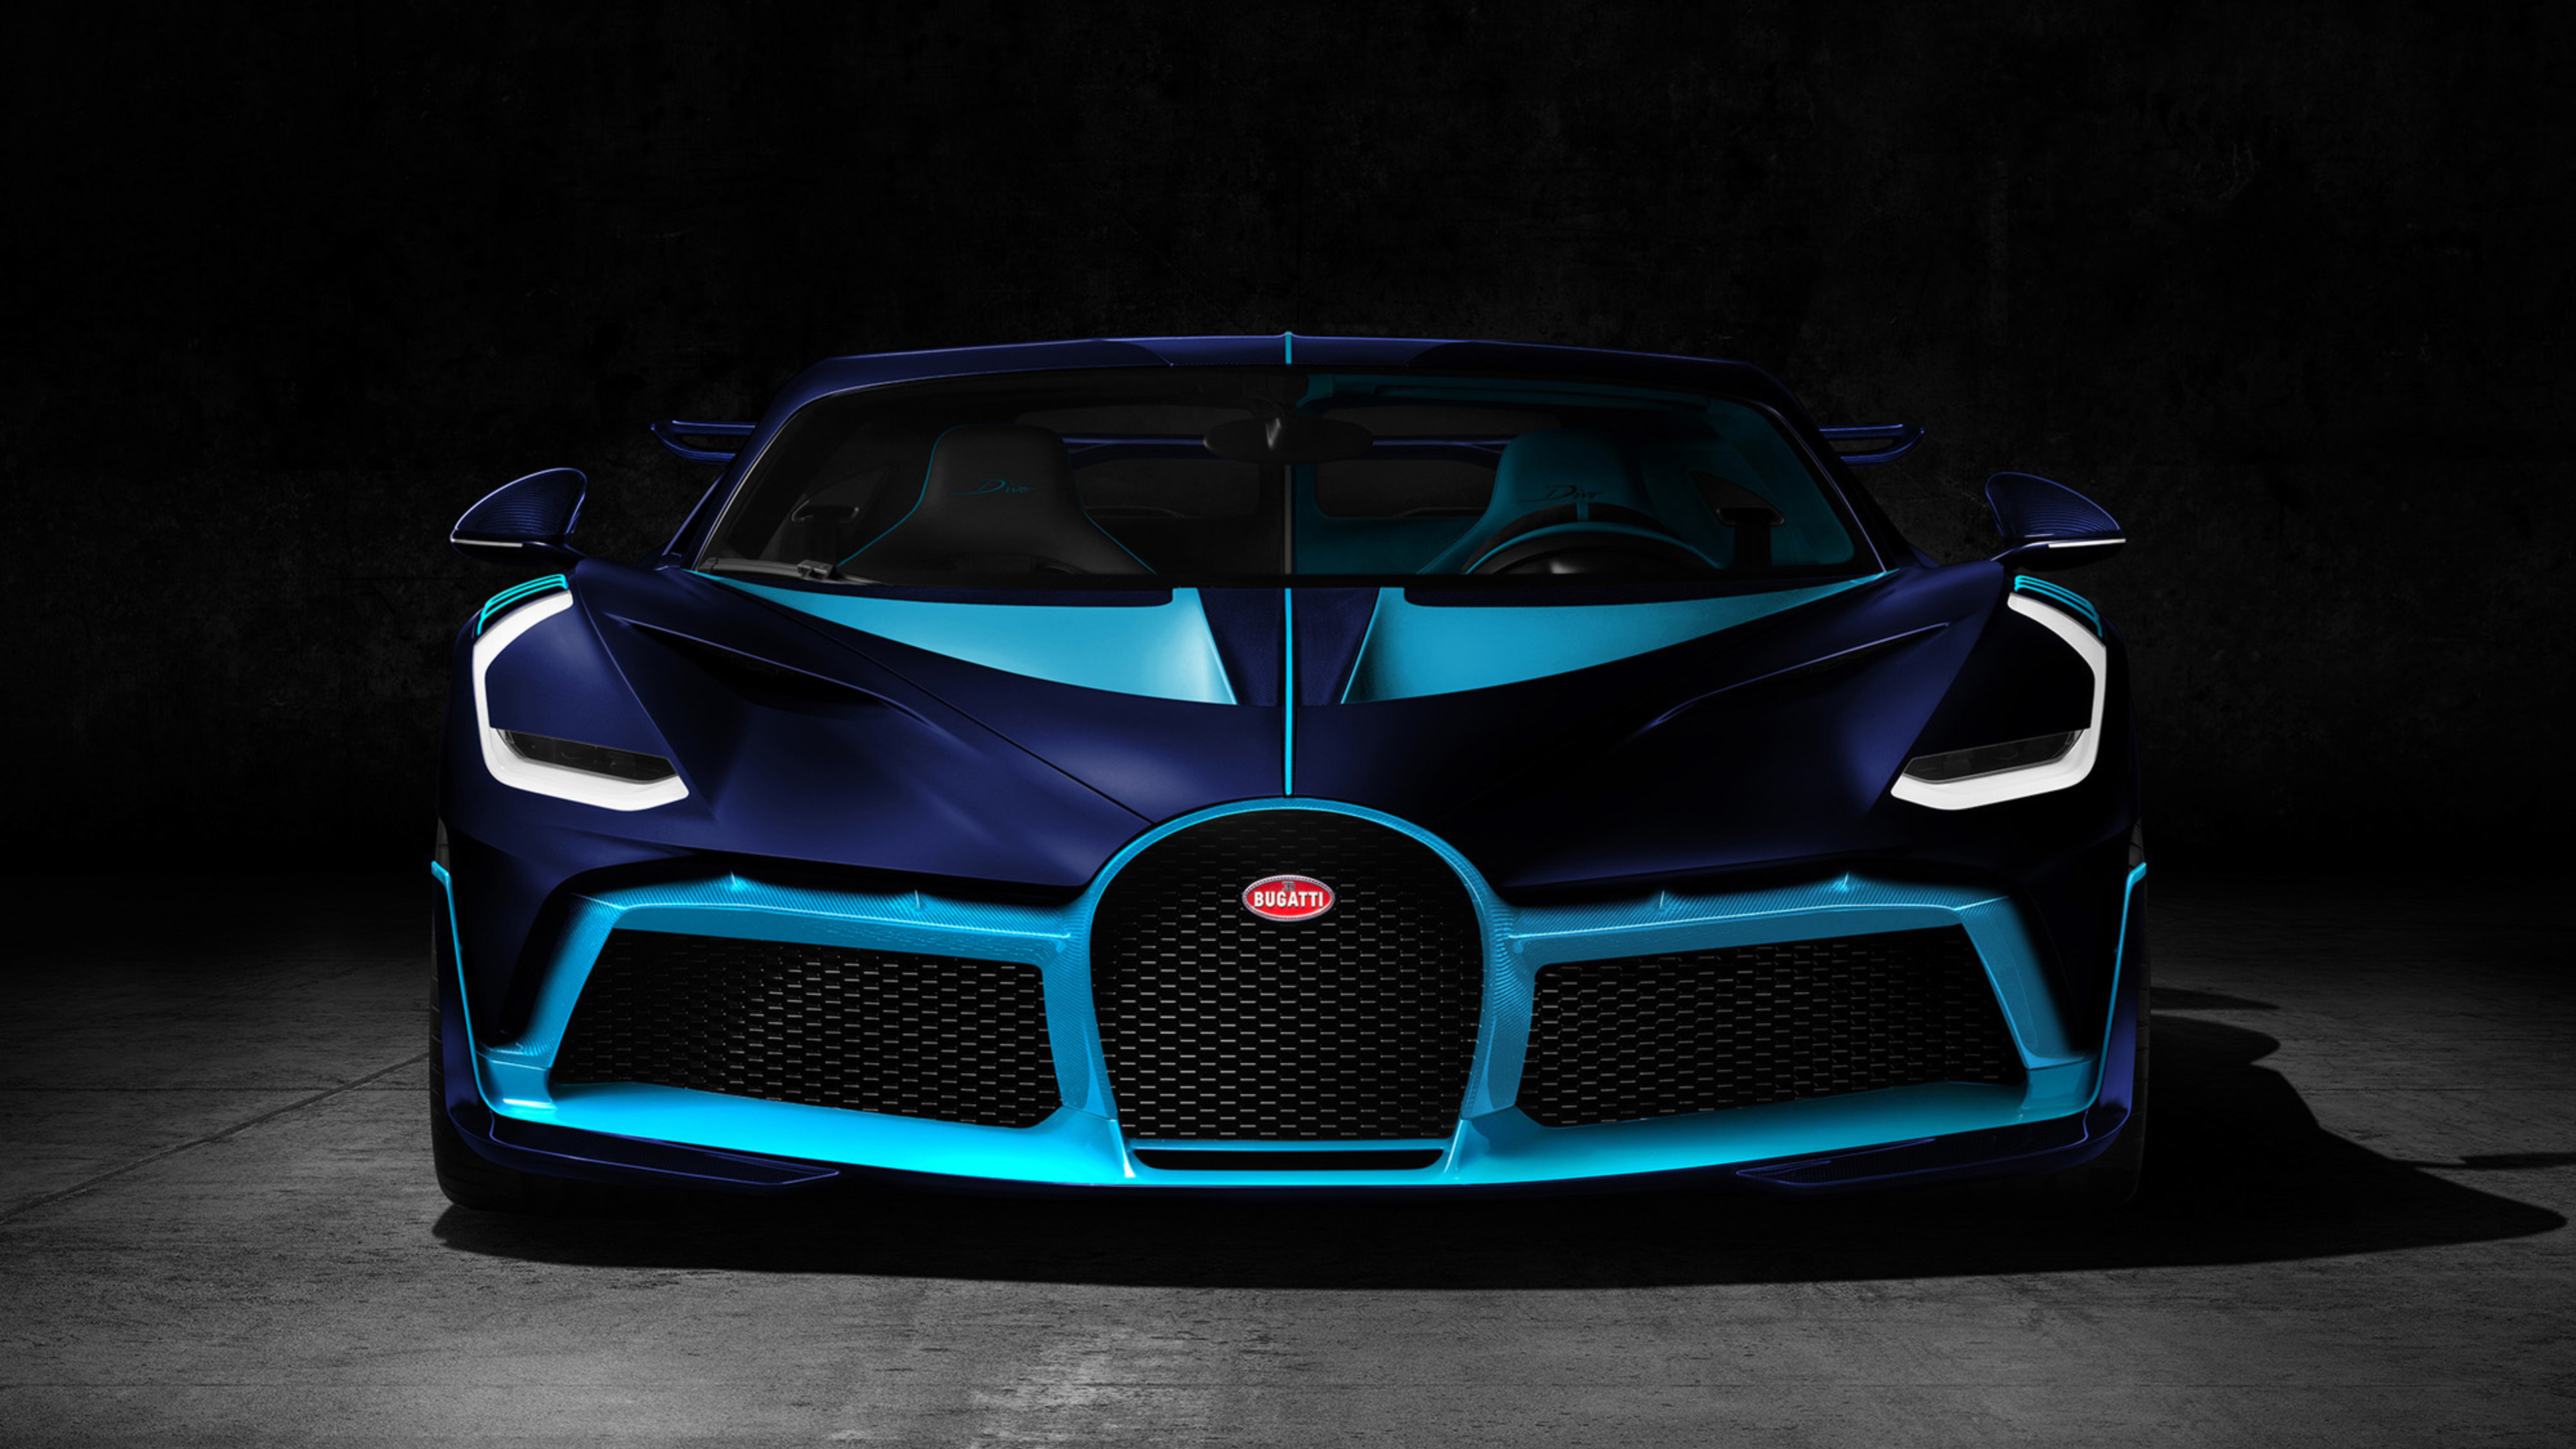 Blue Bugatti Wallpapers